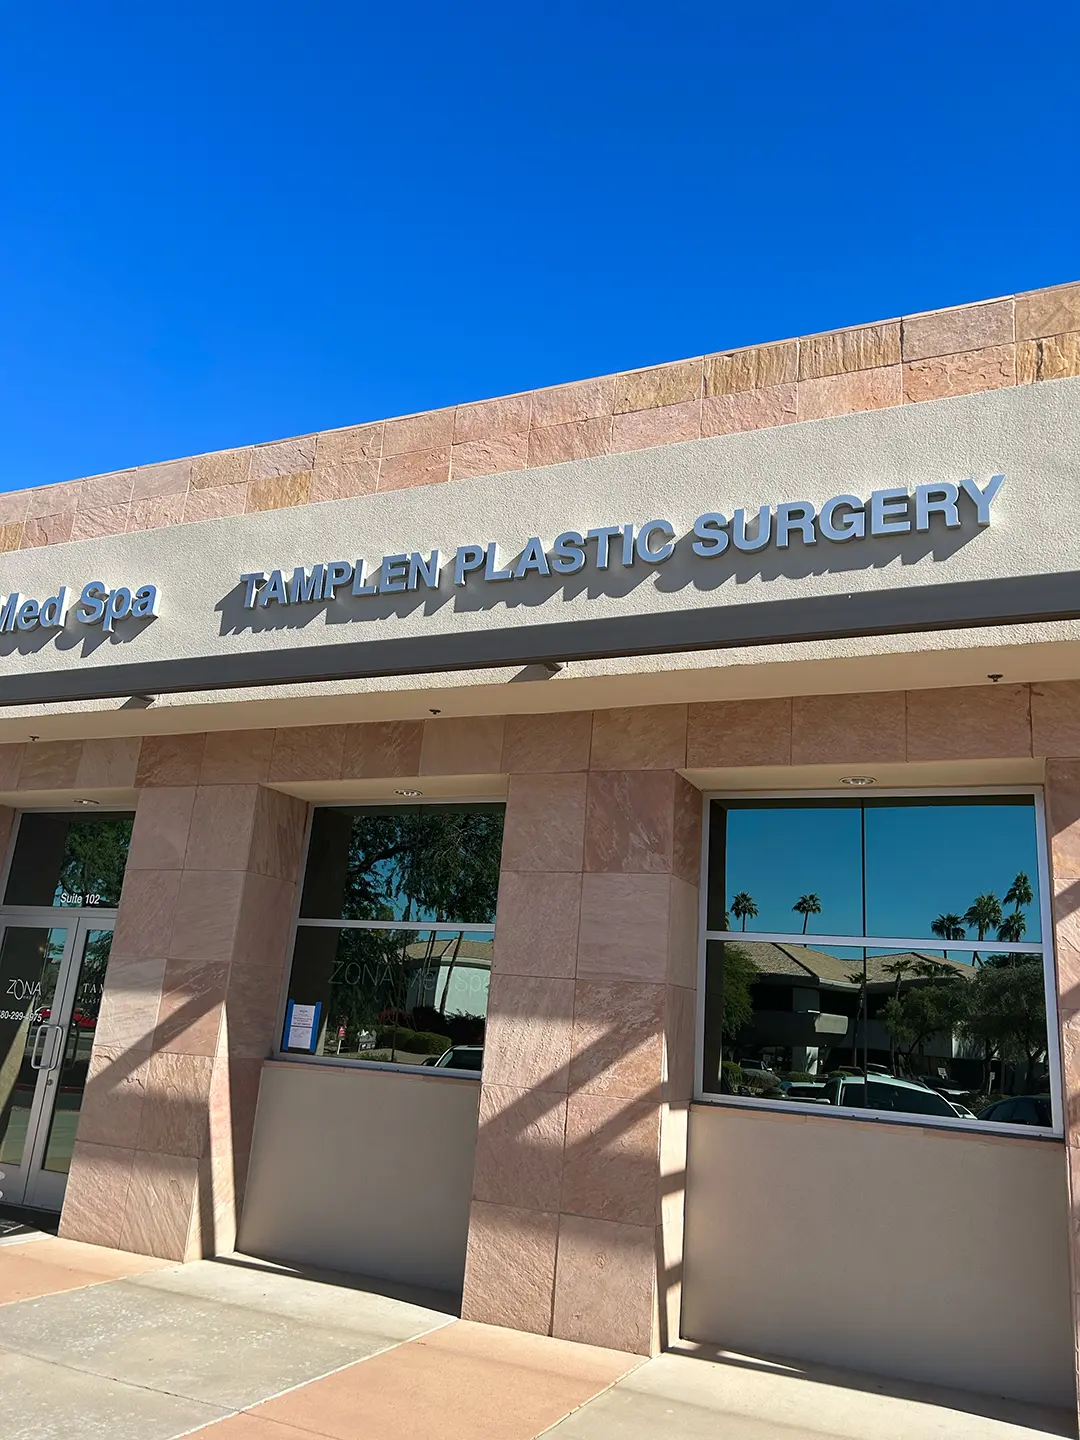 Tamplen Plastic Surgery Center in Scottsdale